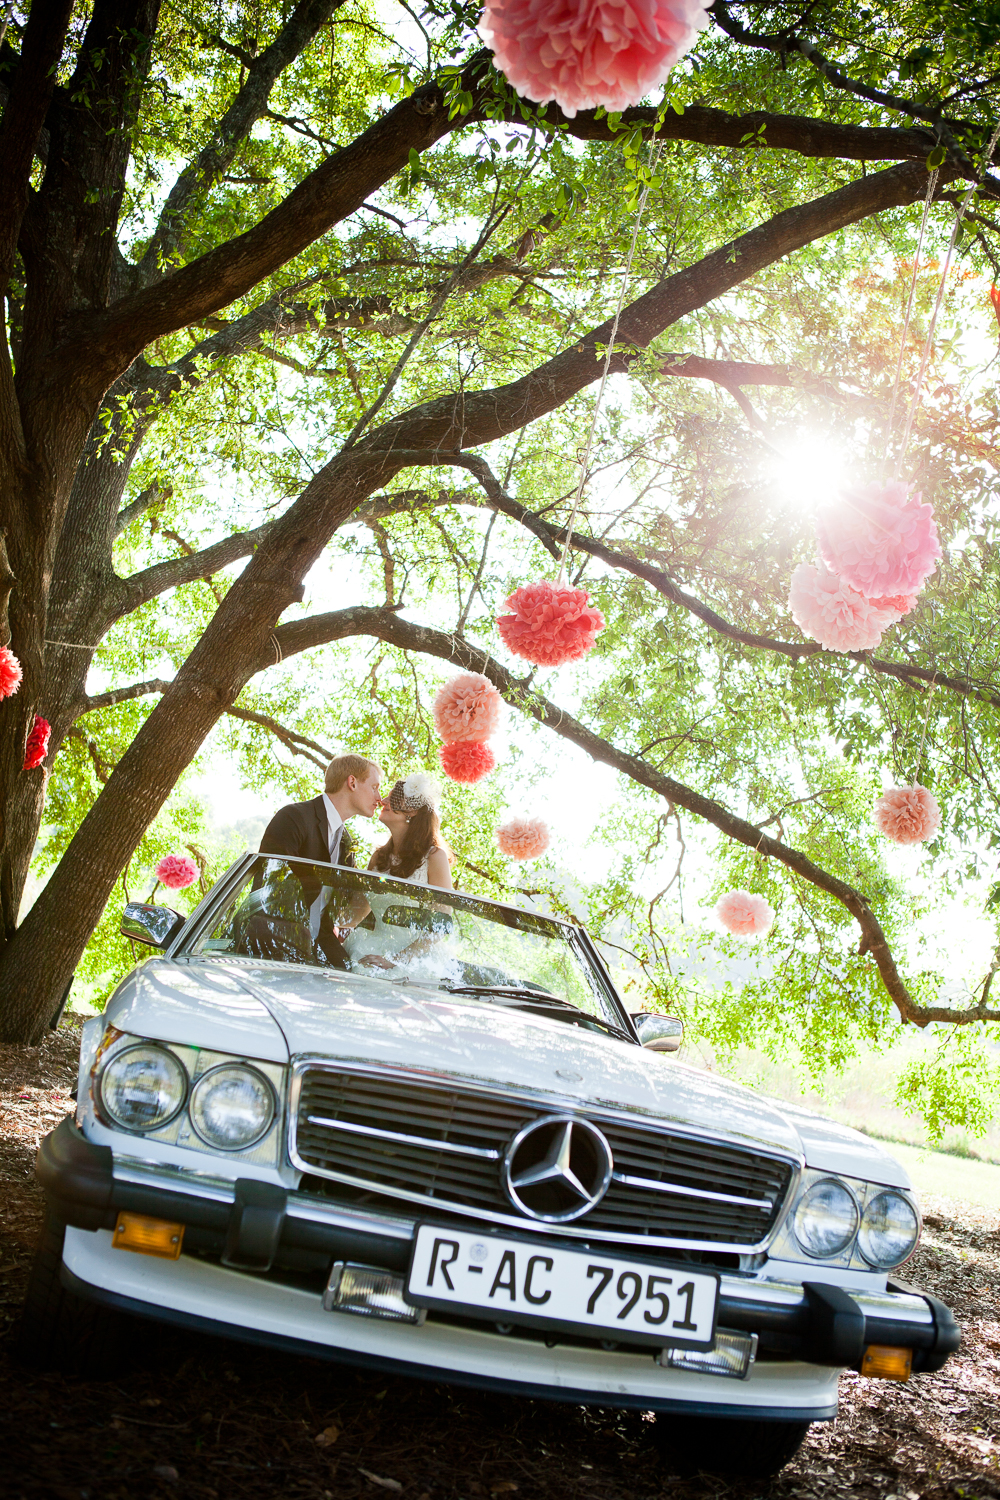  Backyard wedding ideas | At-home wedding in Orlando, Florida 